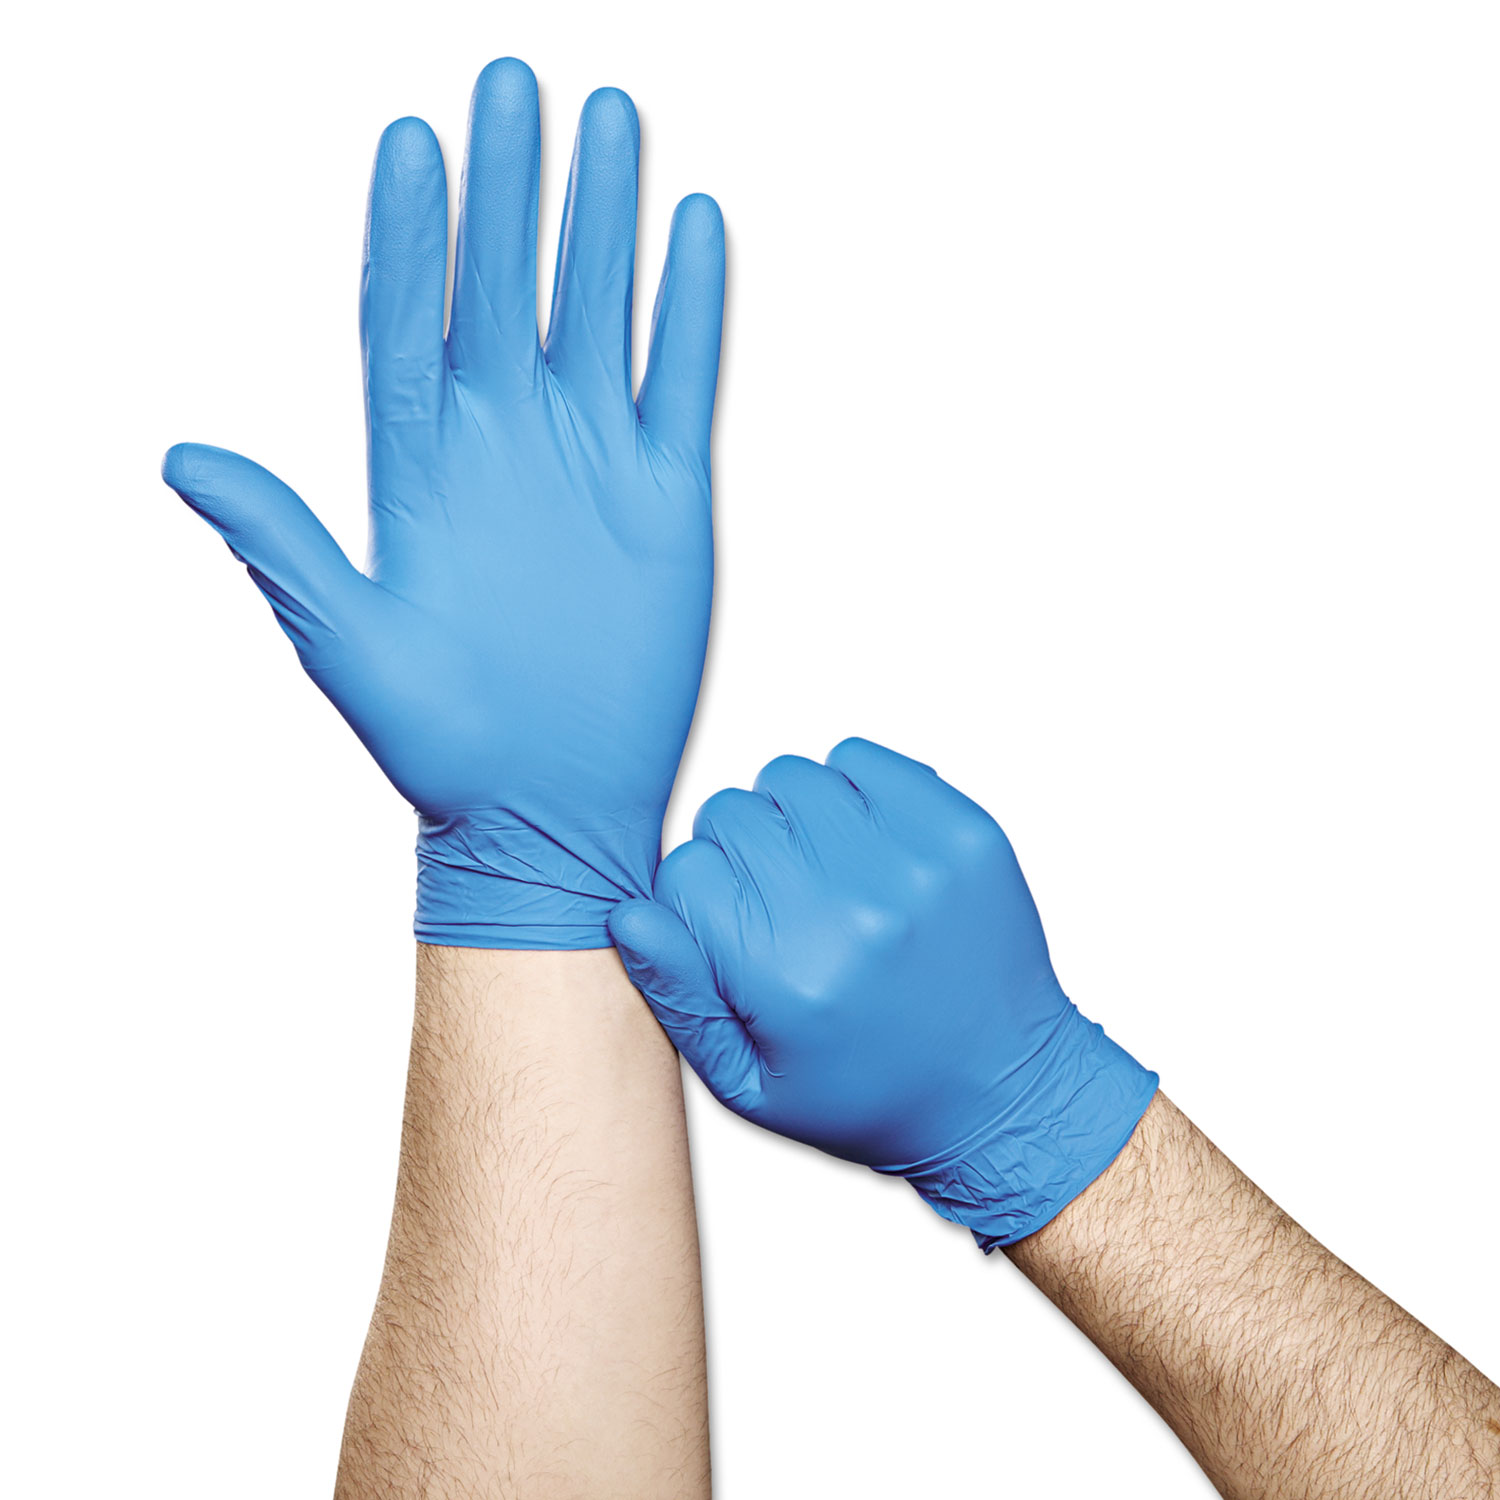 Перчатки эв. Перчатки Ansell нитрил. Nitrile Gloves перчатки. Перчатки connect Blue Nitrile. Нитриловые перчатки Анселл тач.